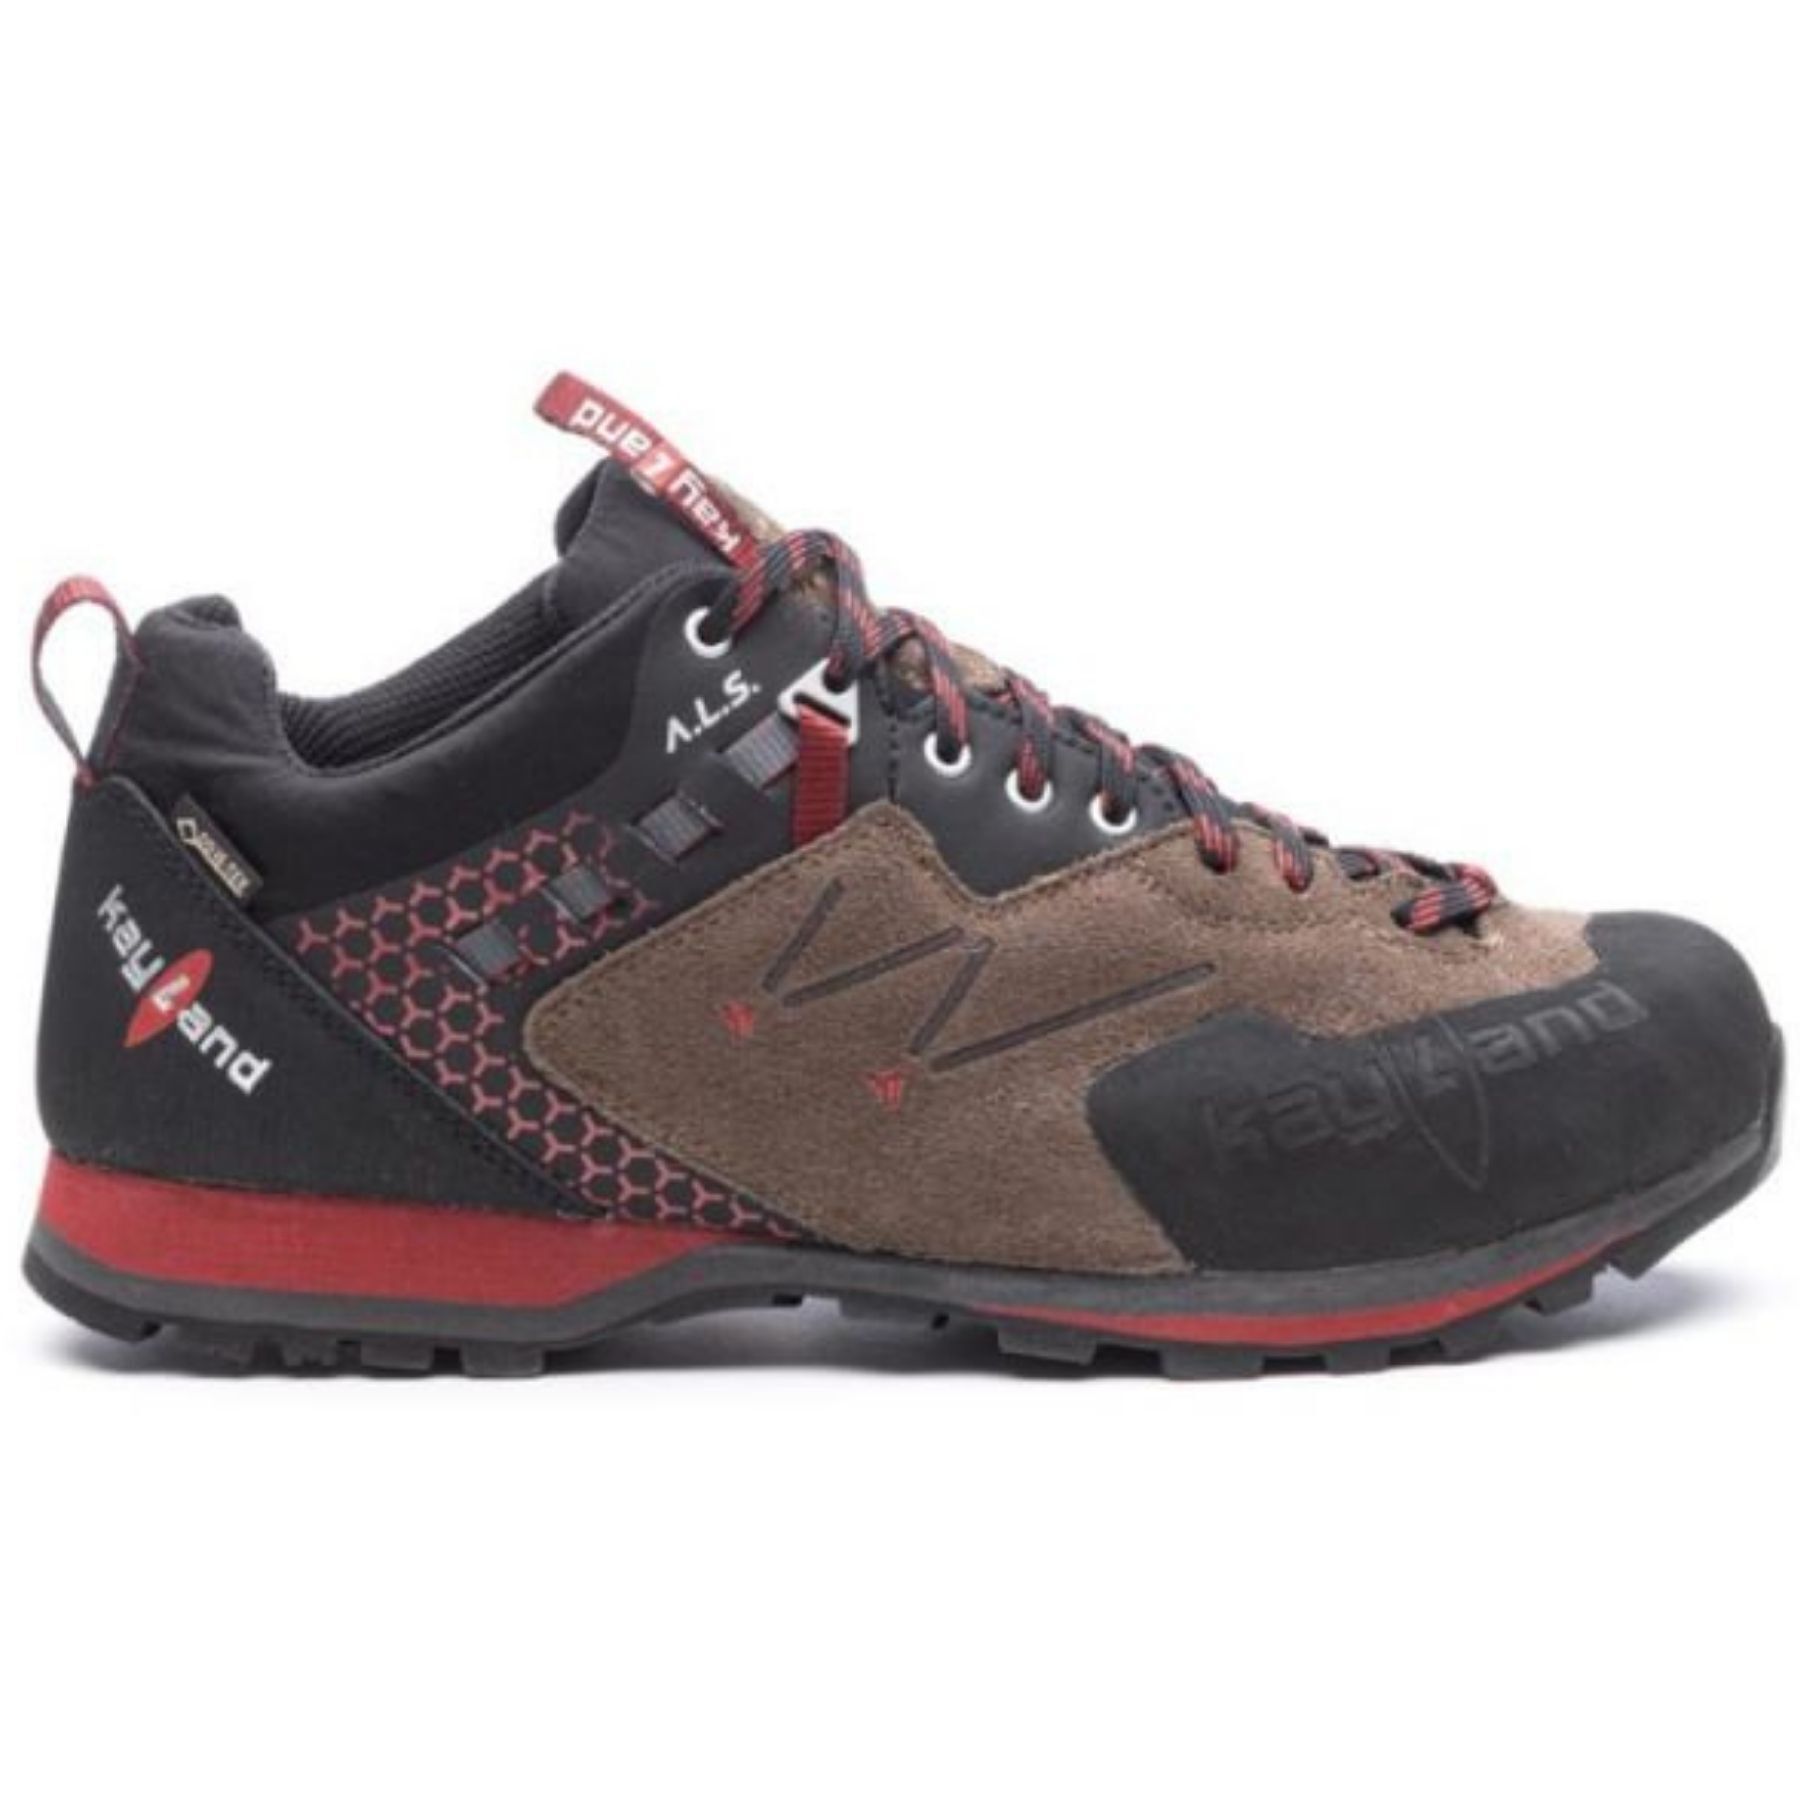 Kayland Vitrik GTX - Hiking shoes - Men's